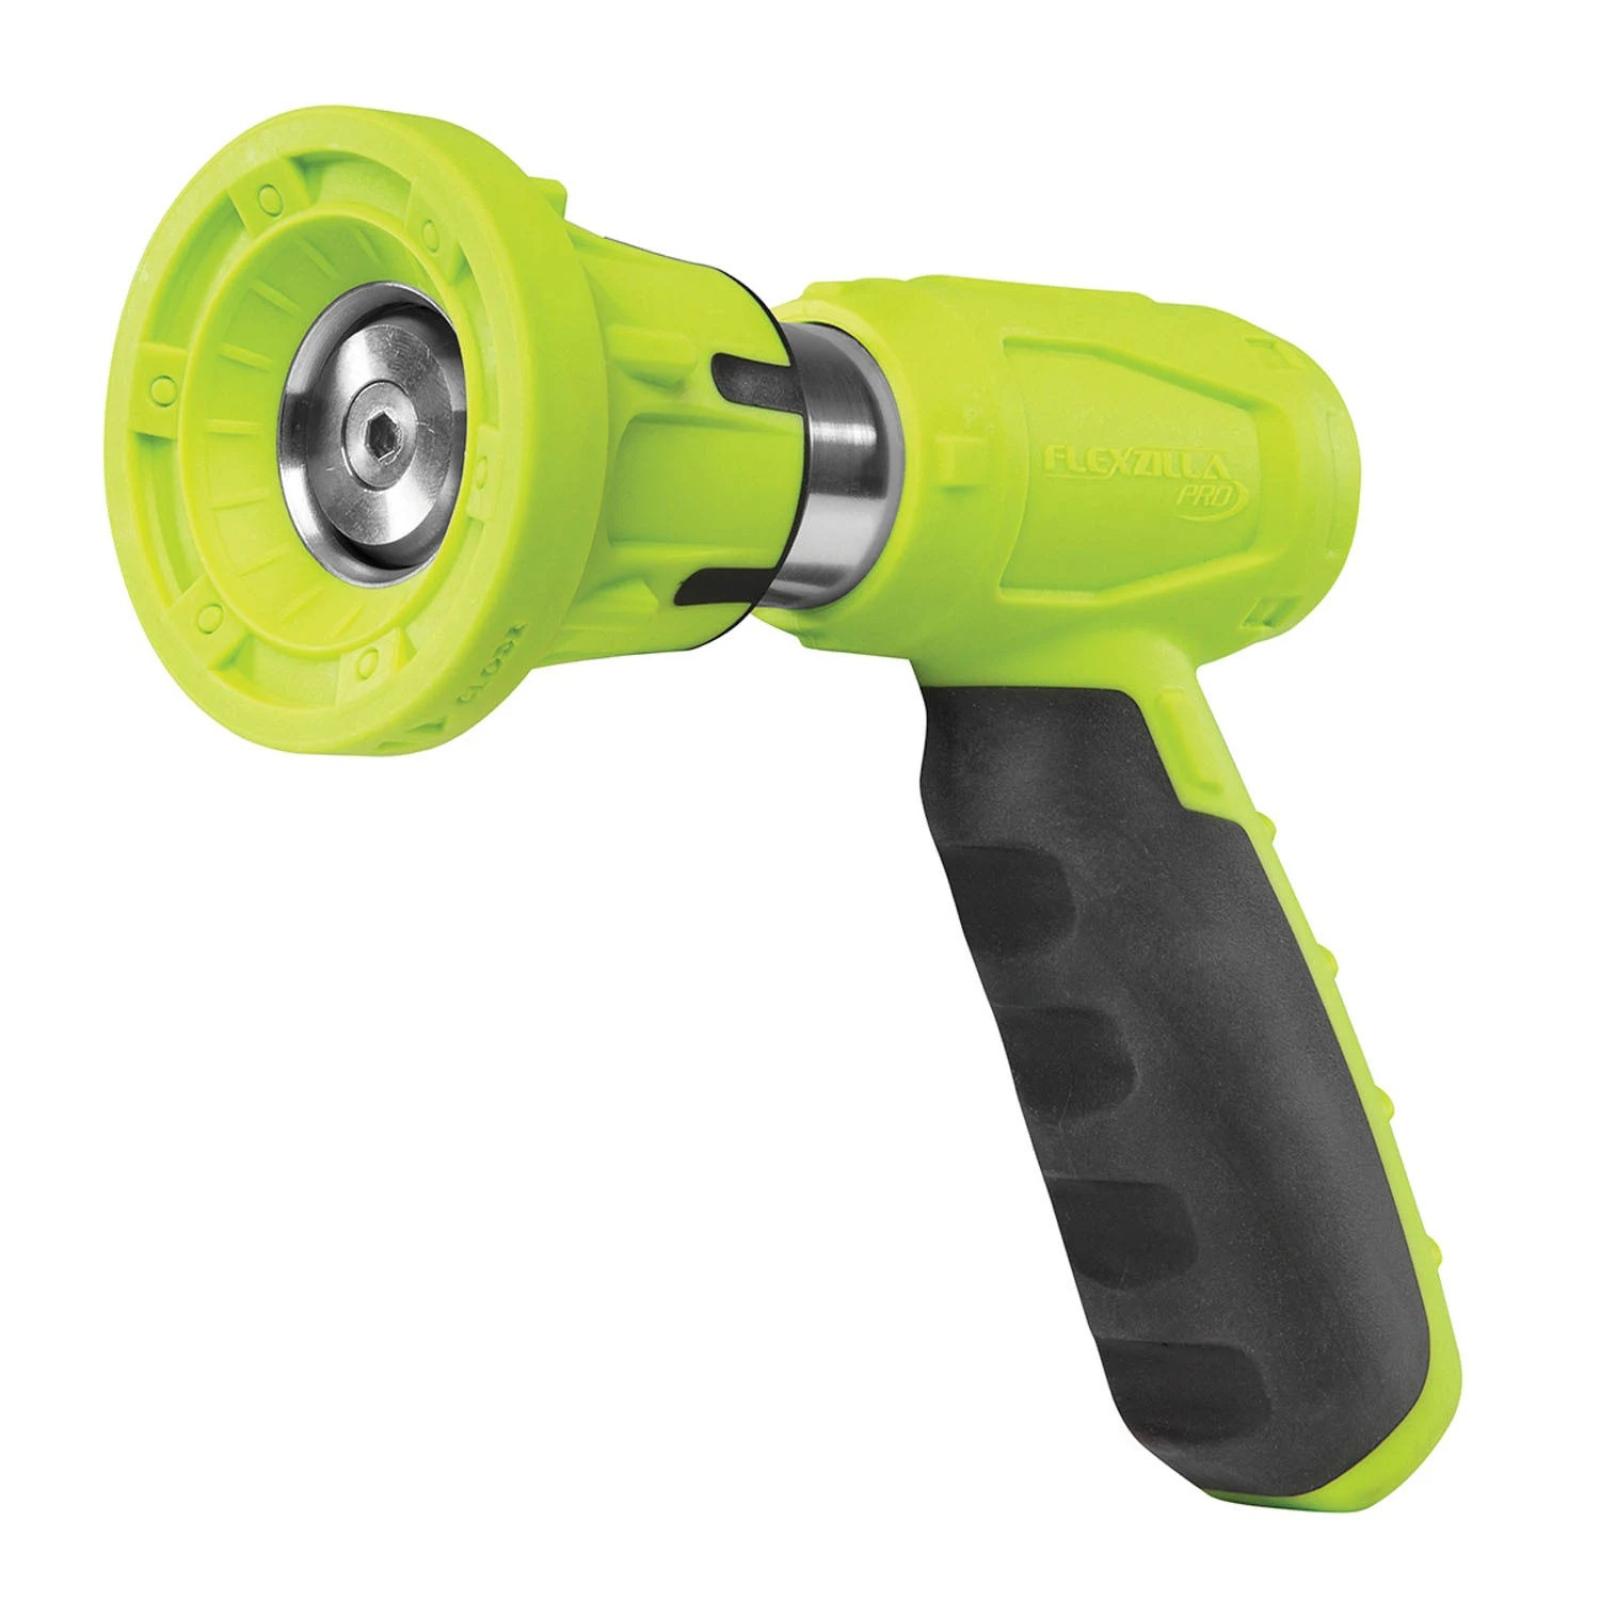 Flexzilla Pro Pistol Grip Water Nozzle